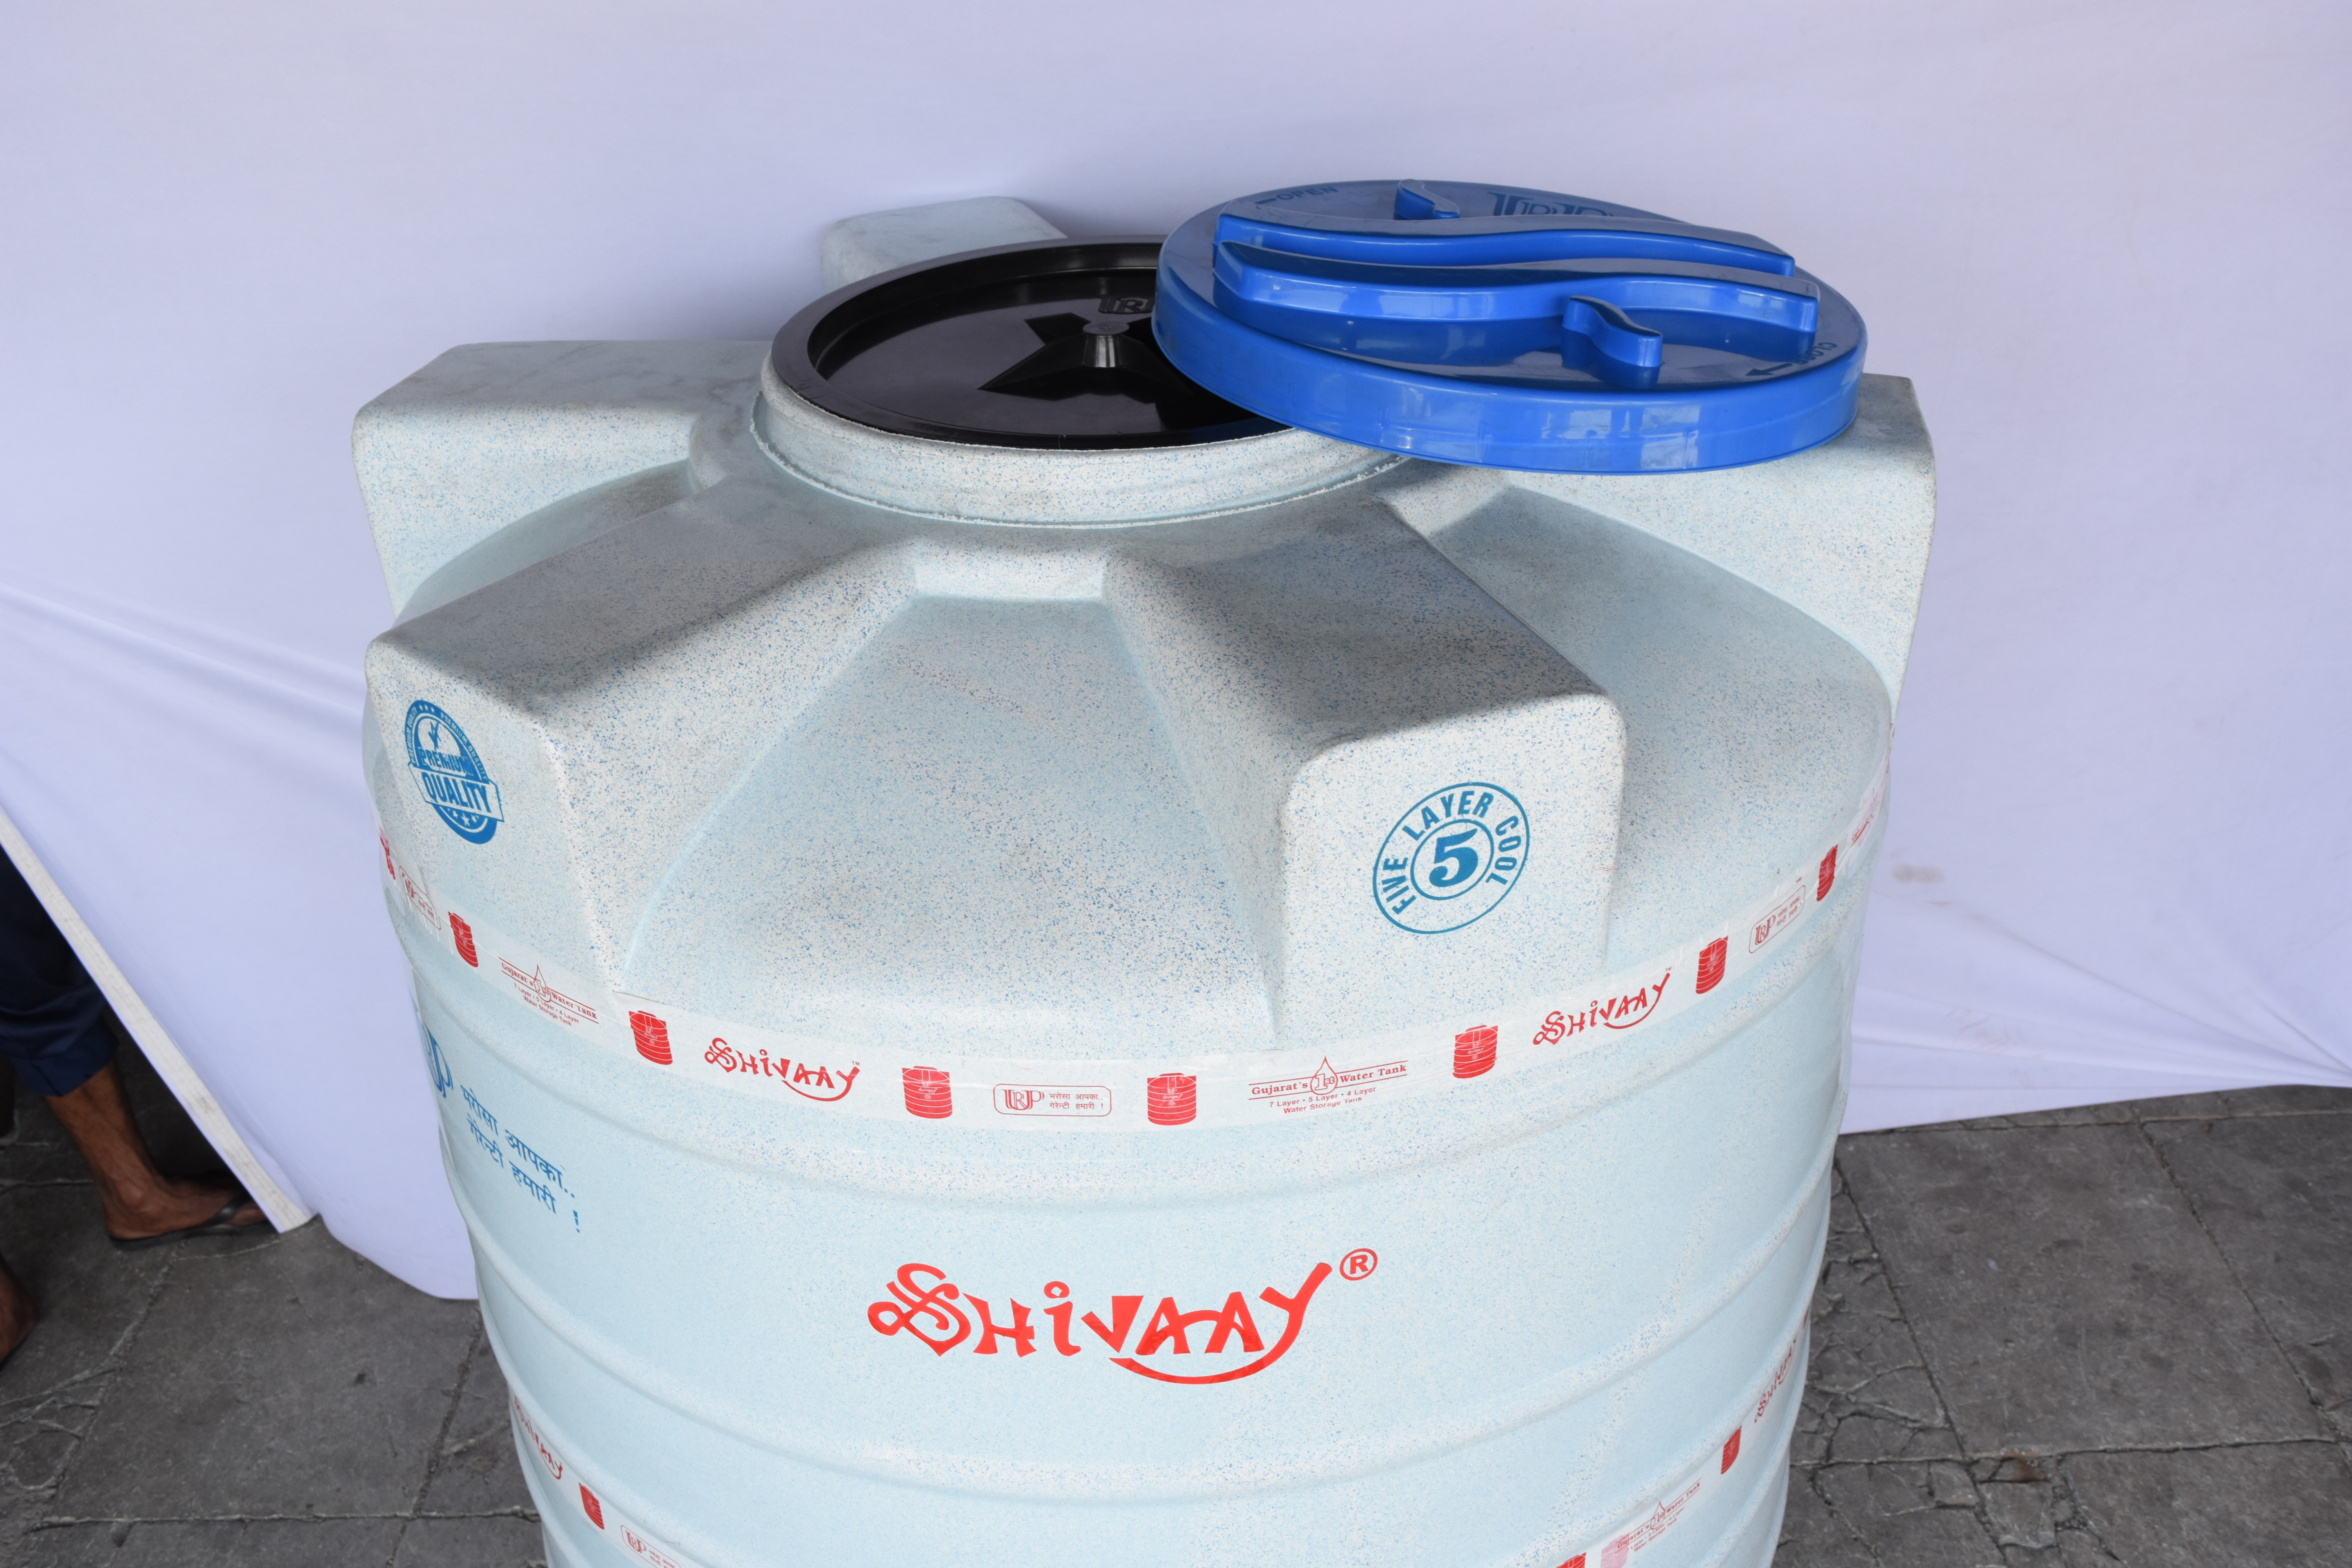 5 Layer plastic storage water tanks